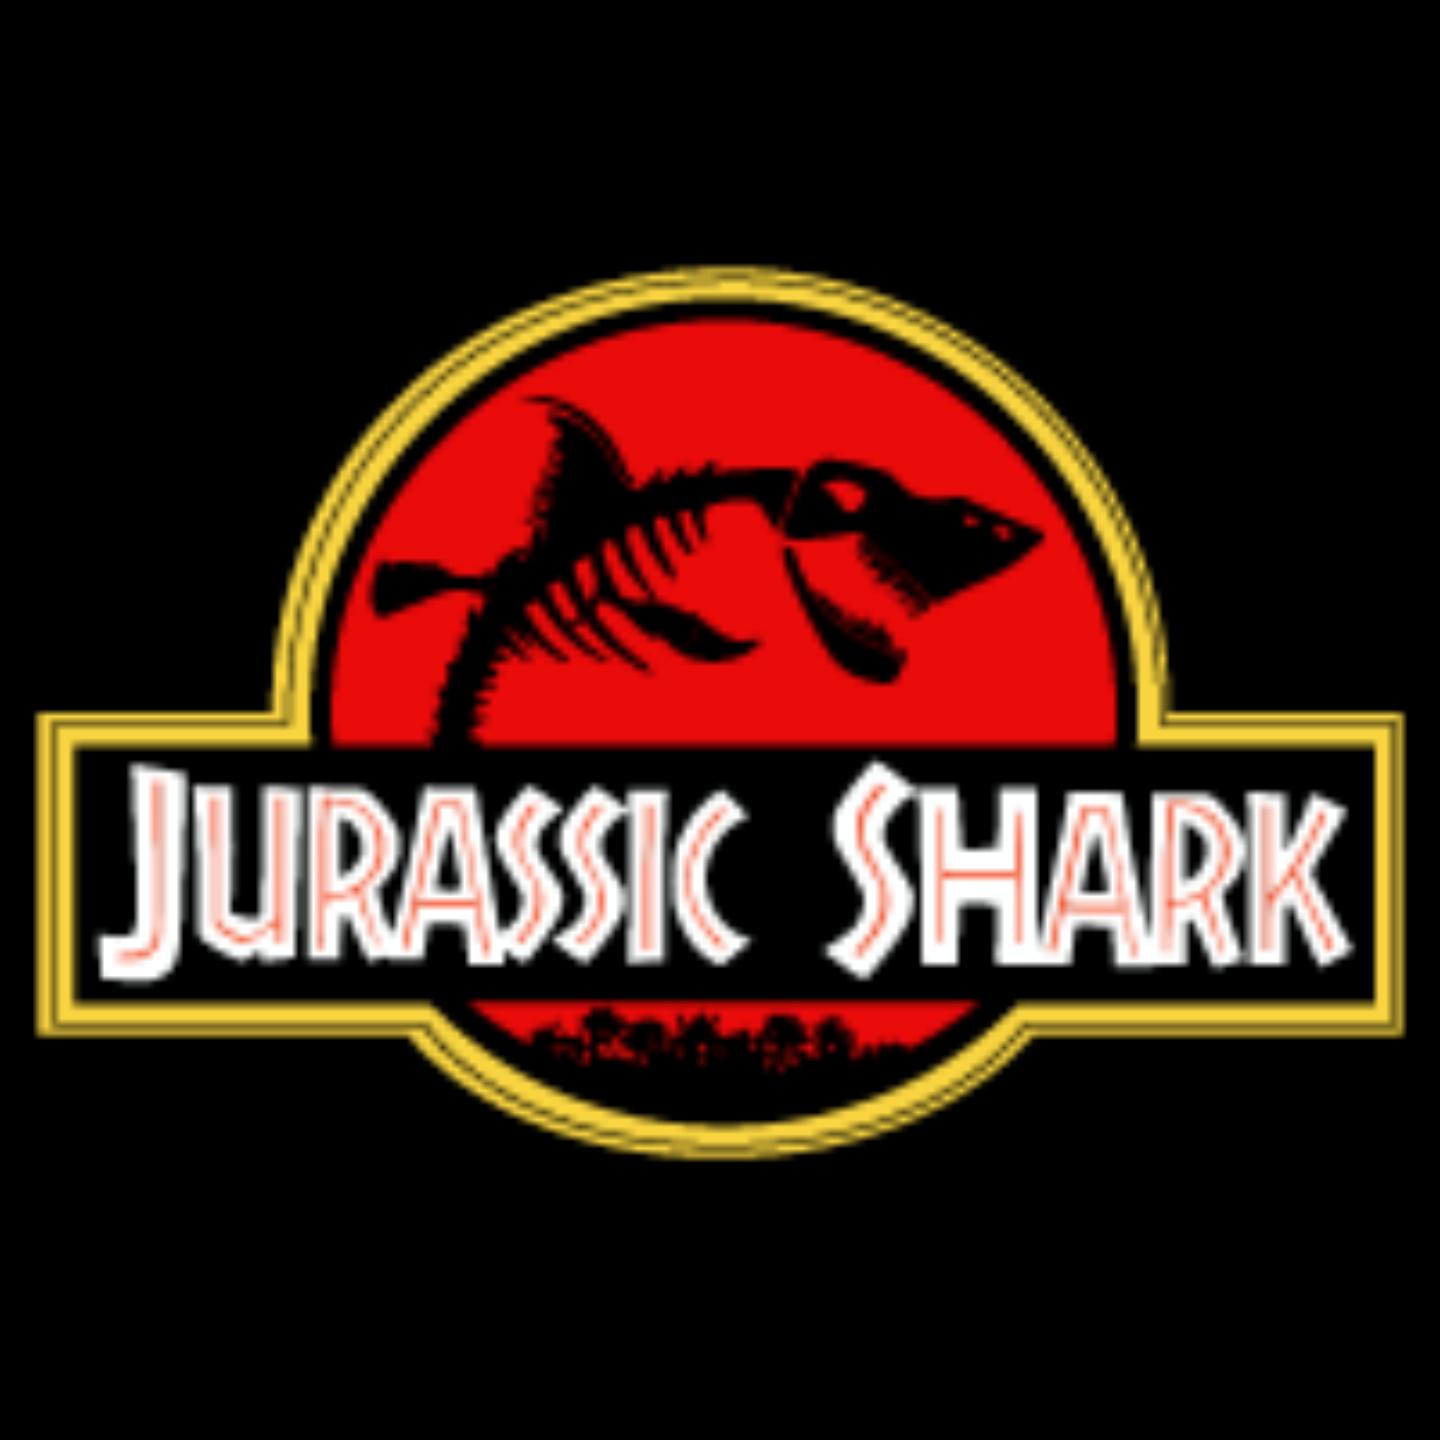 Jurassic Park with Shark Liver Oil